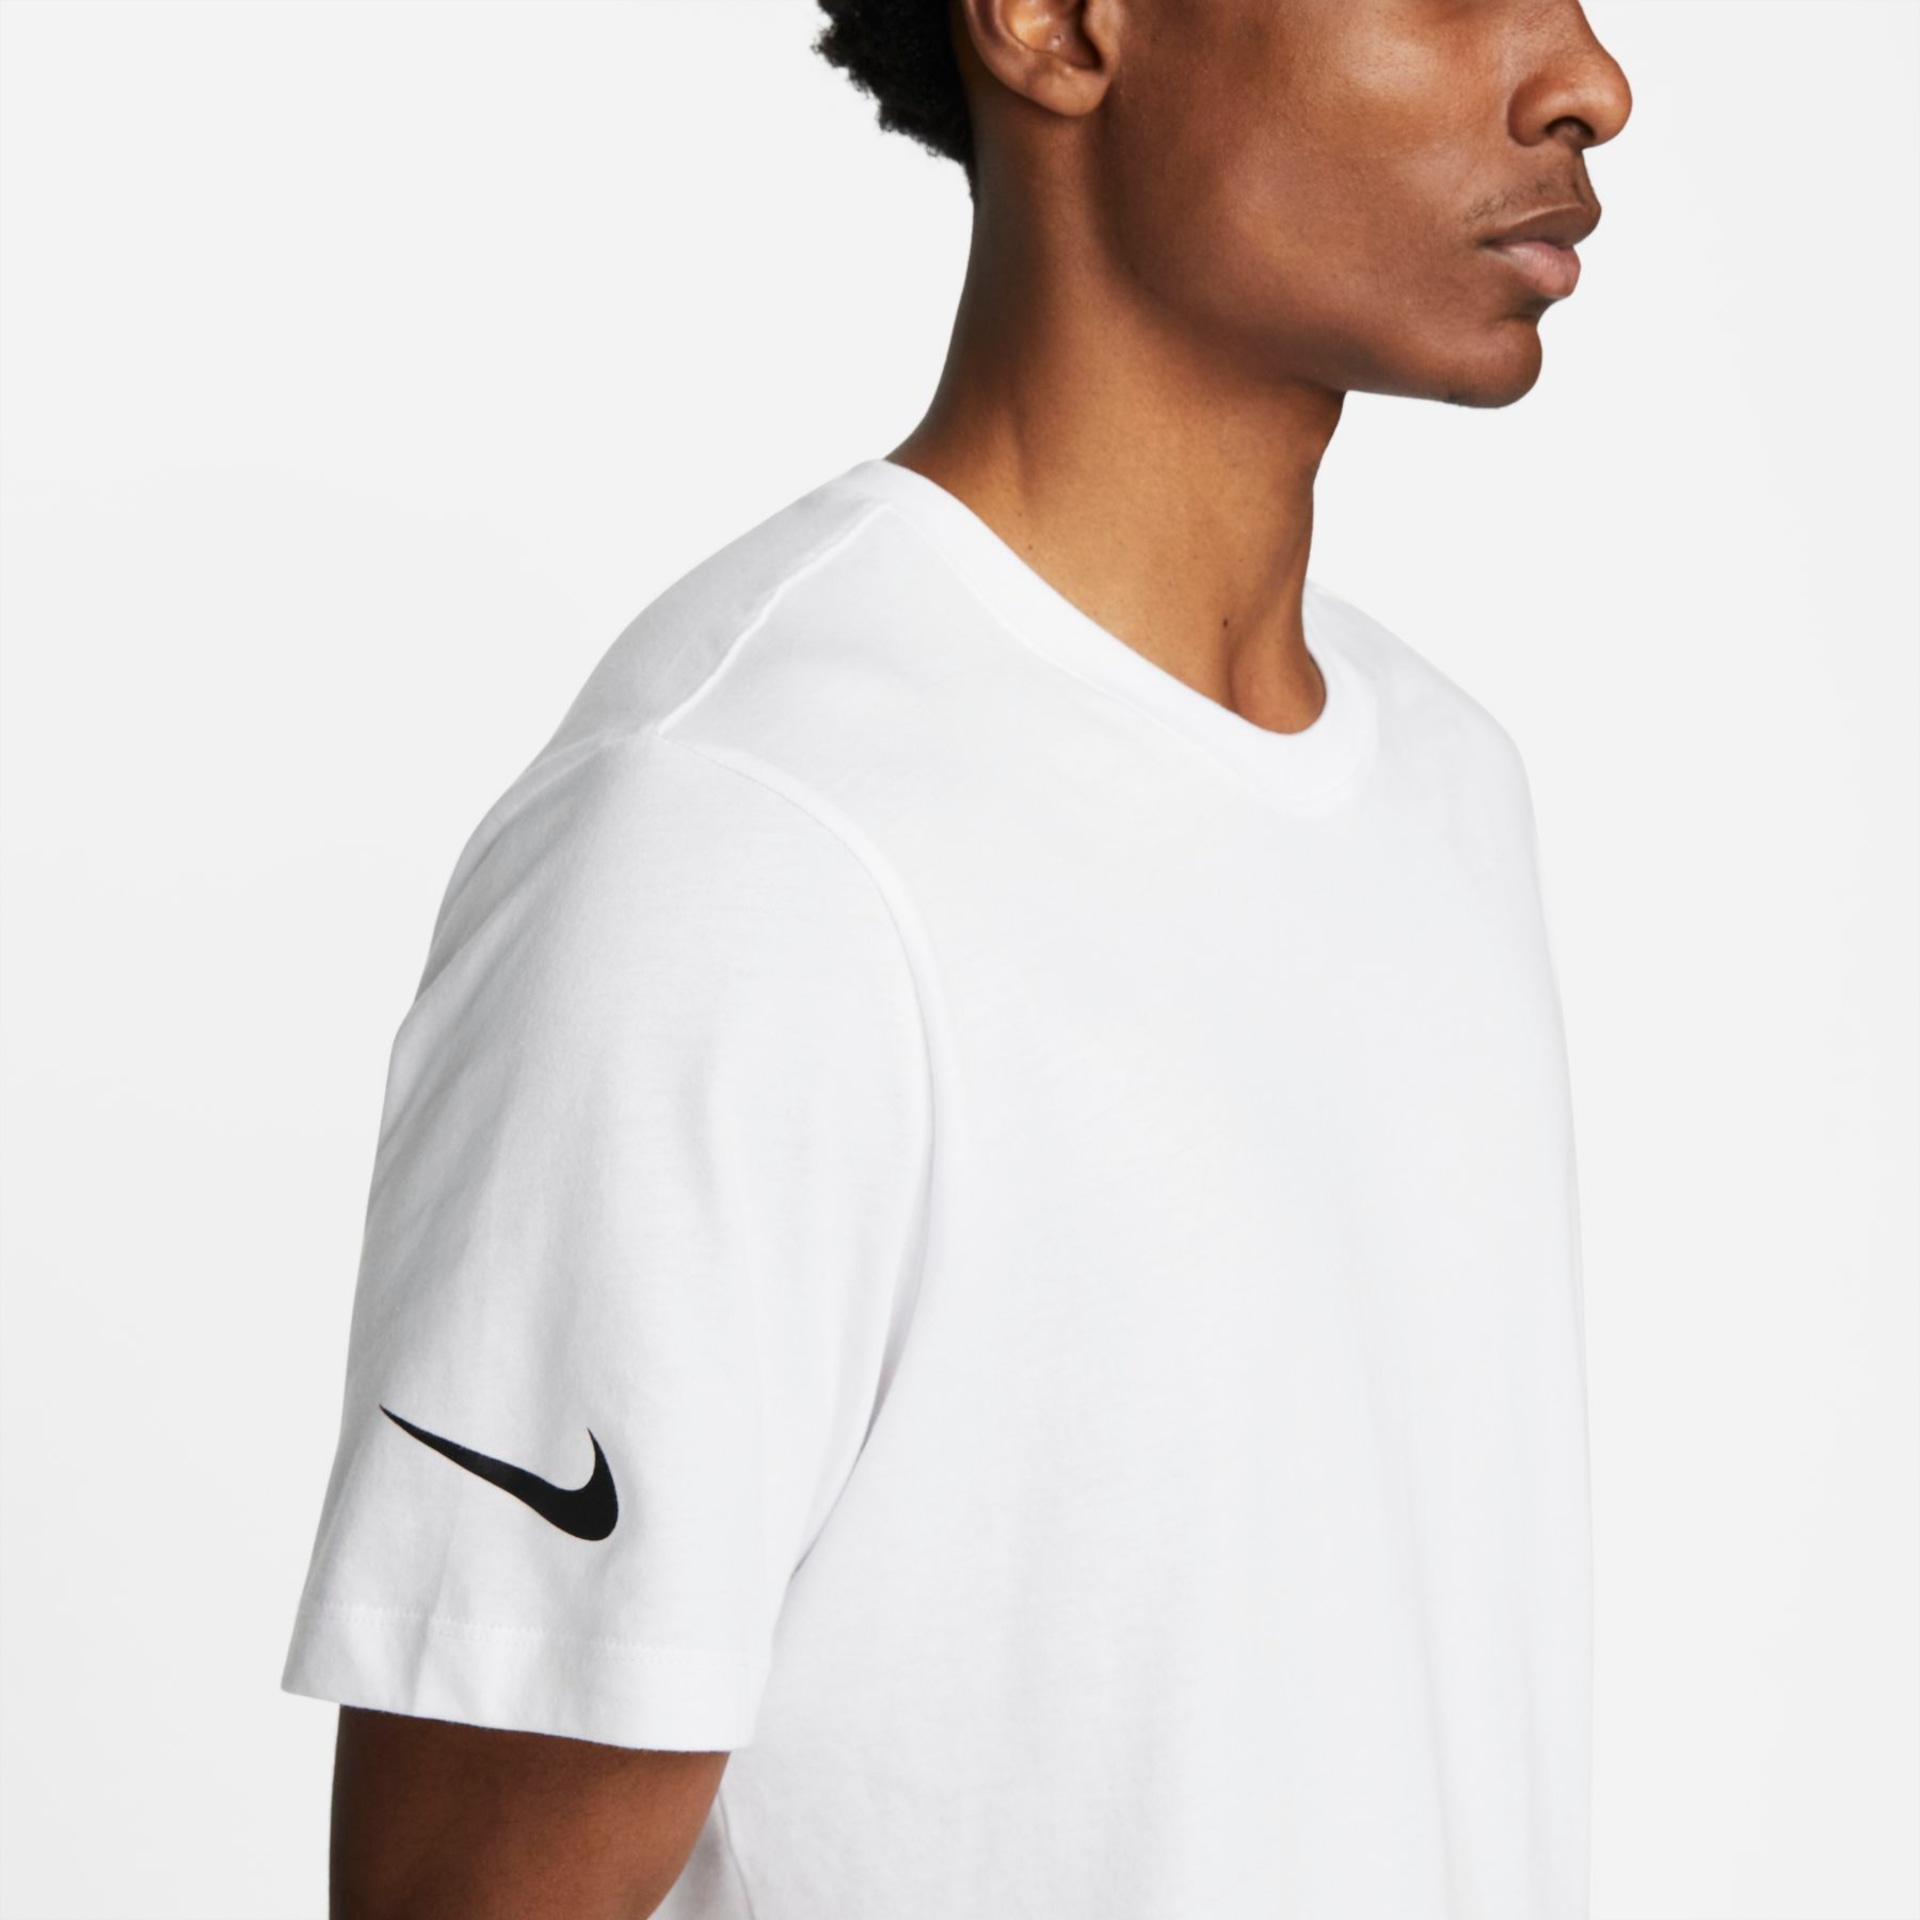 Camiseta Nike Park Masculina - Foto 3